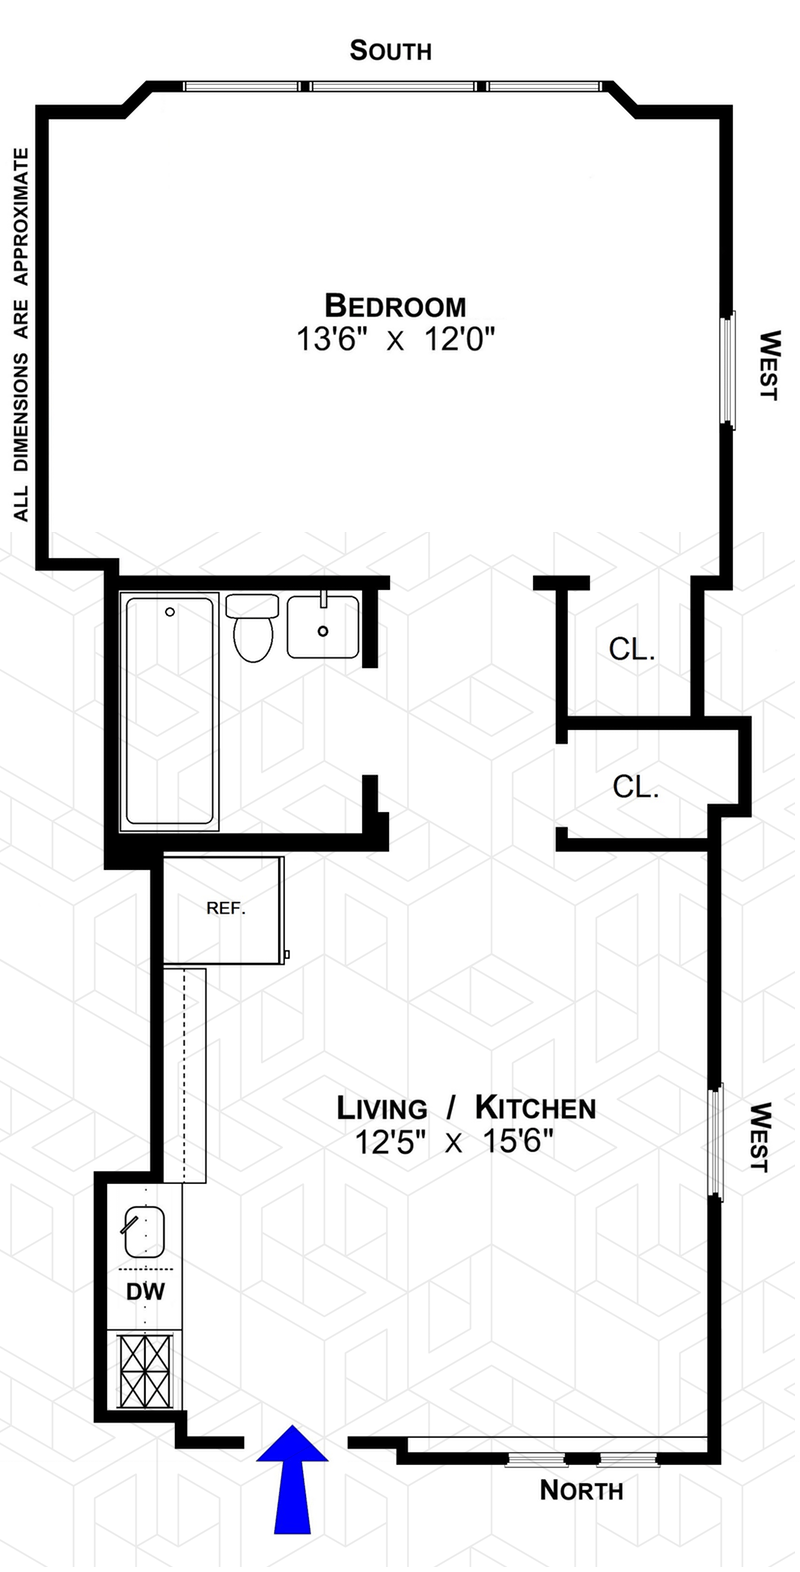 Floorplan for 245 West 72nd Street, 7A